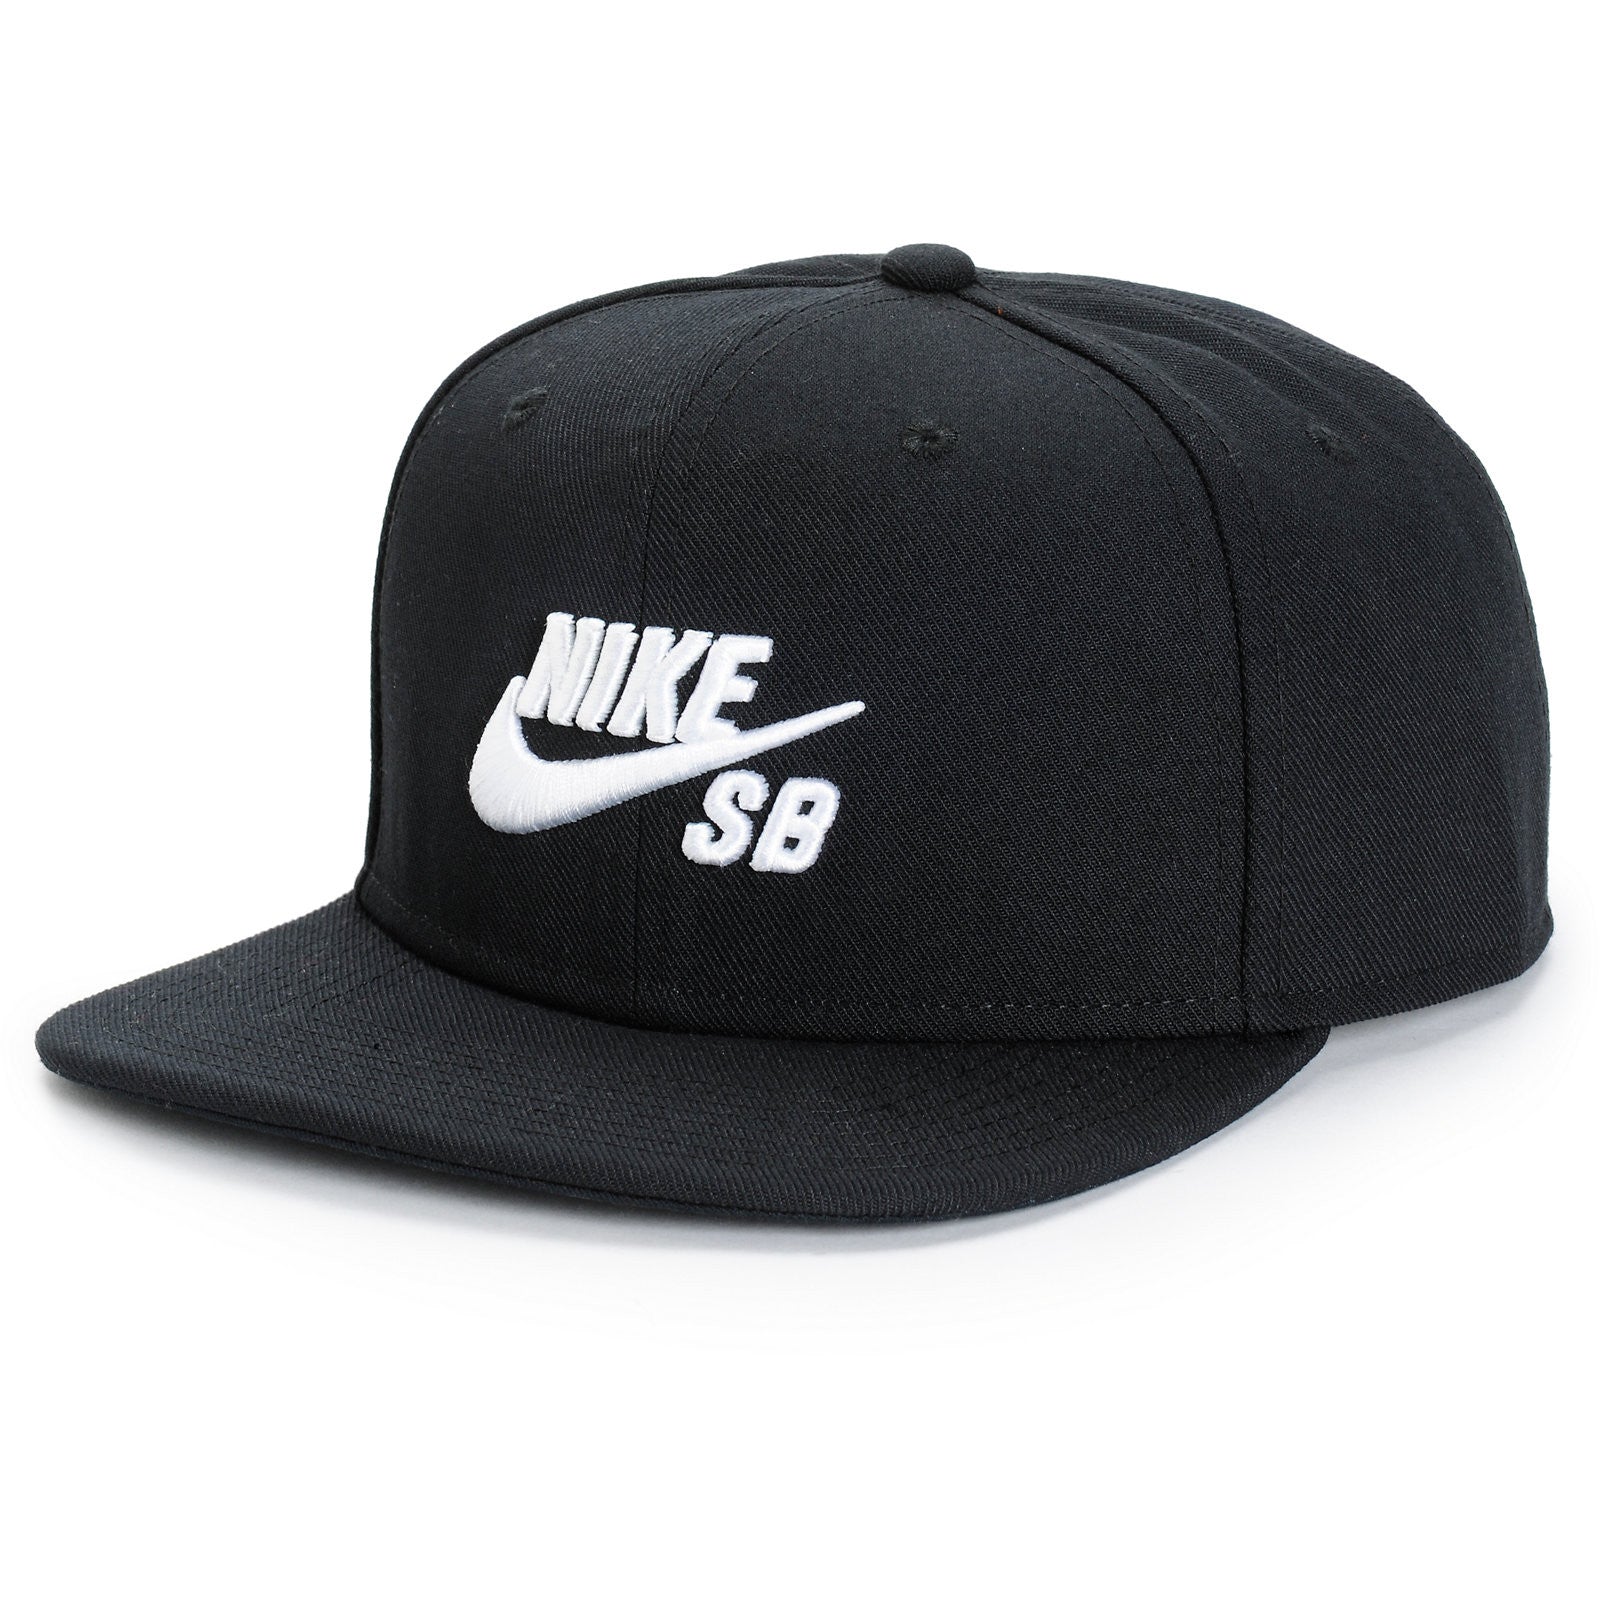 SB Icon Hat - Black/White - New